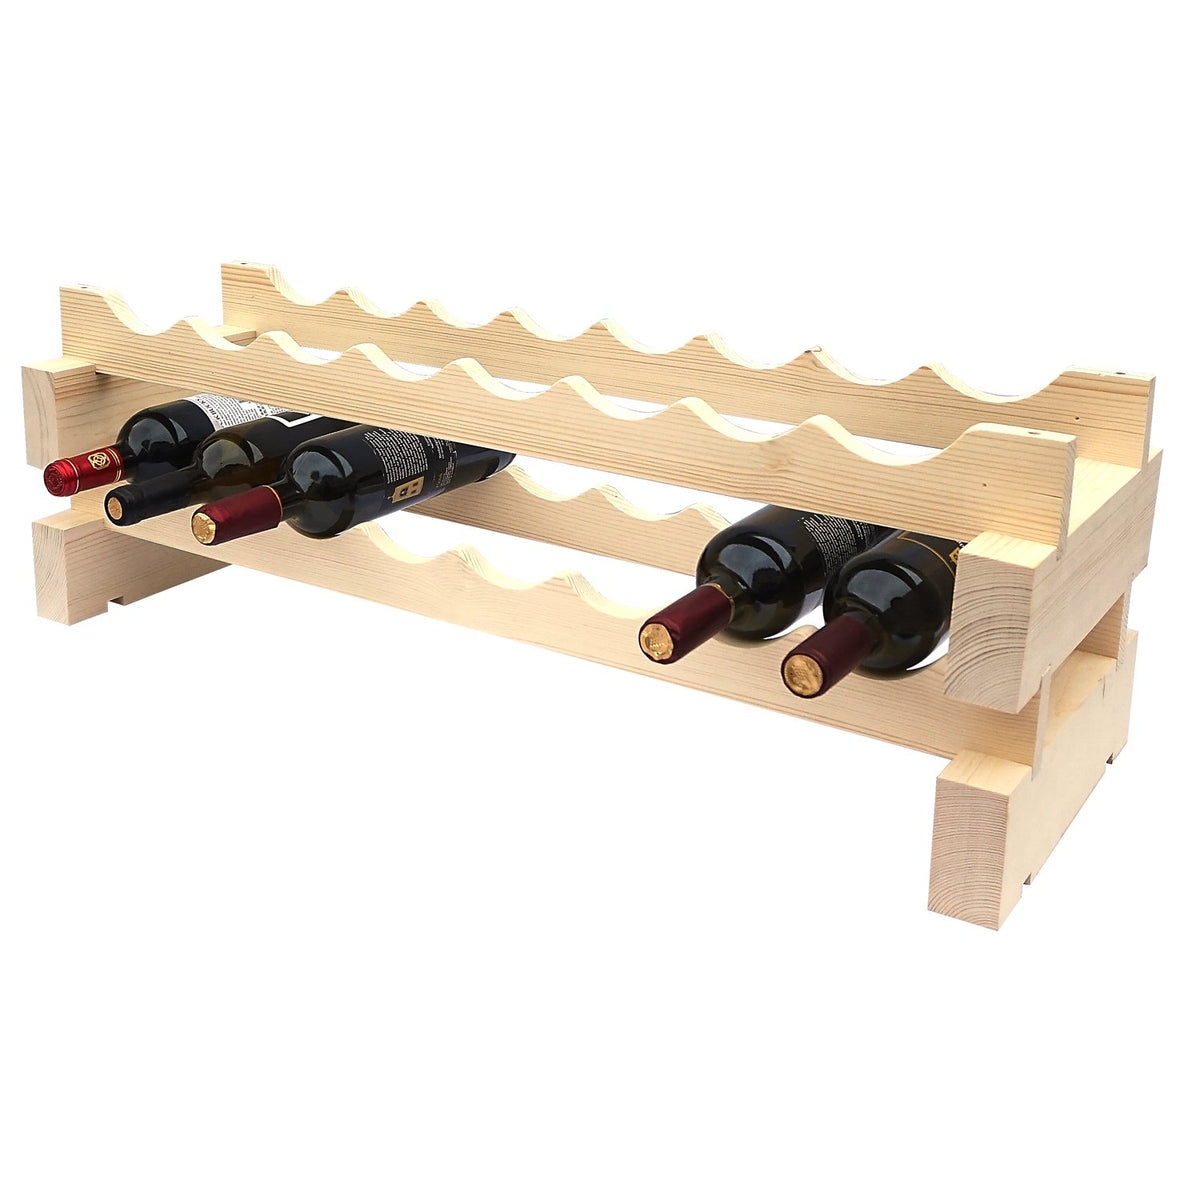 9 Bottle Modular Wine Rack Kit - New Zealand Pine - With Bottles of Wine